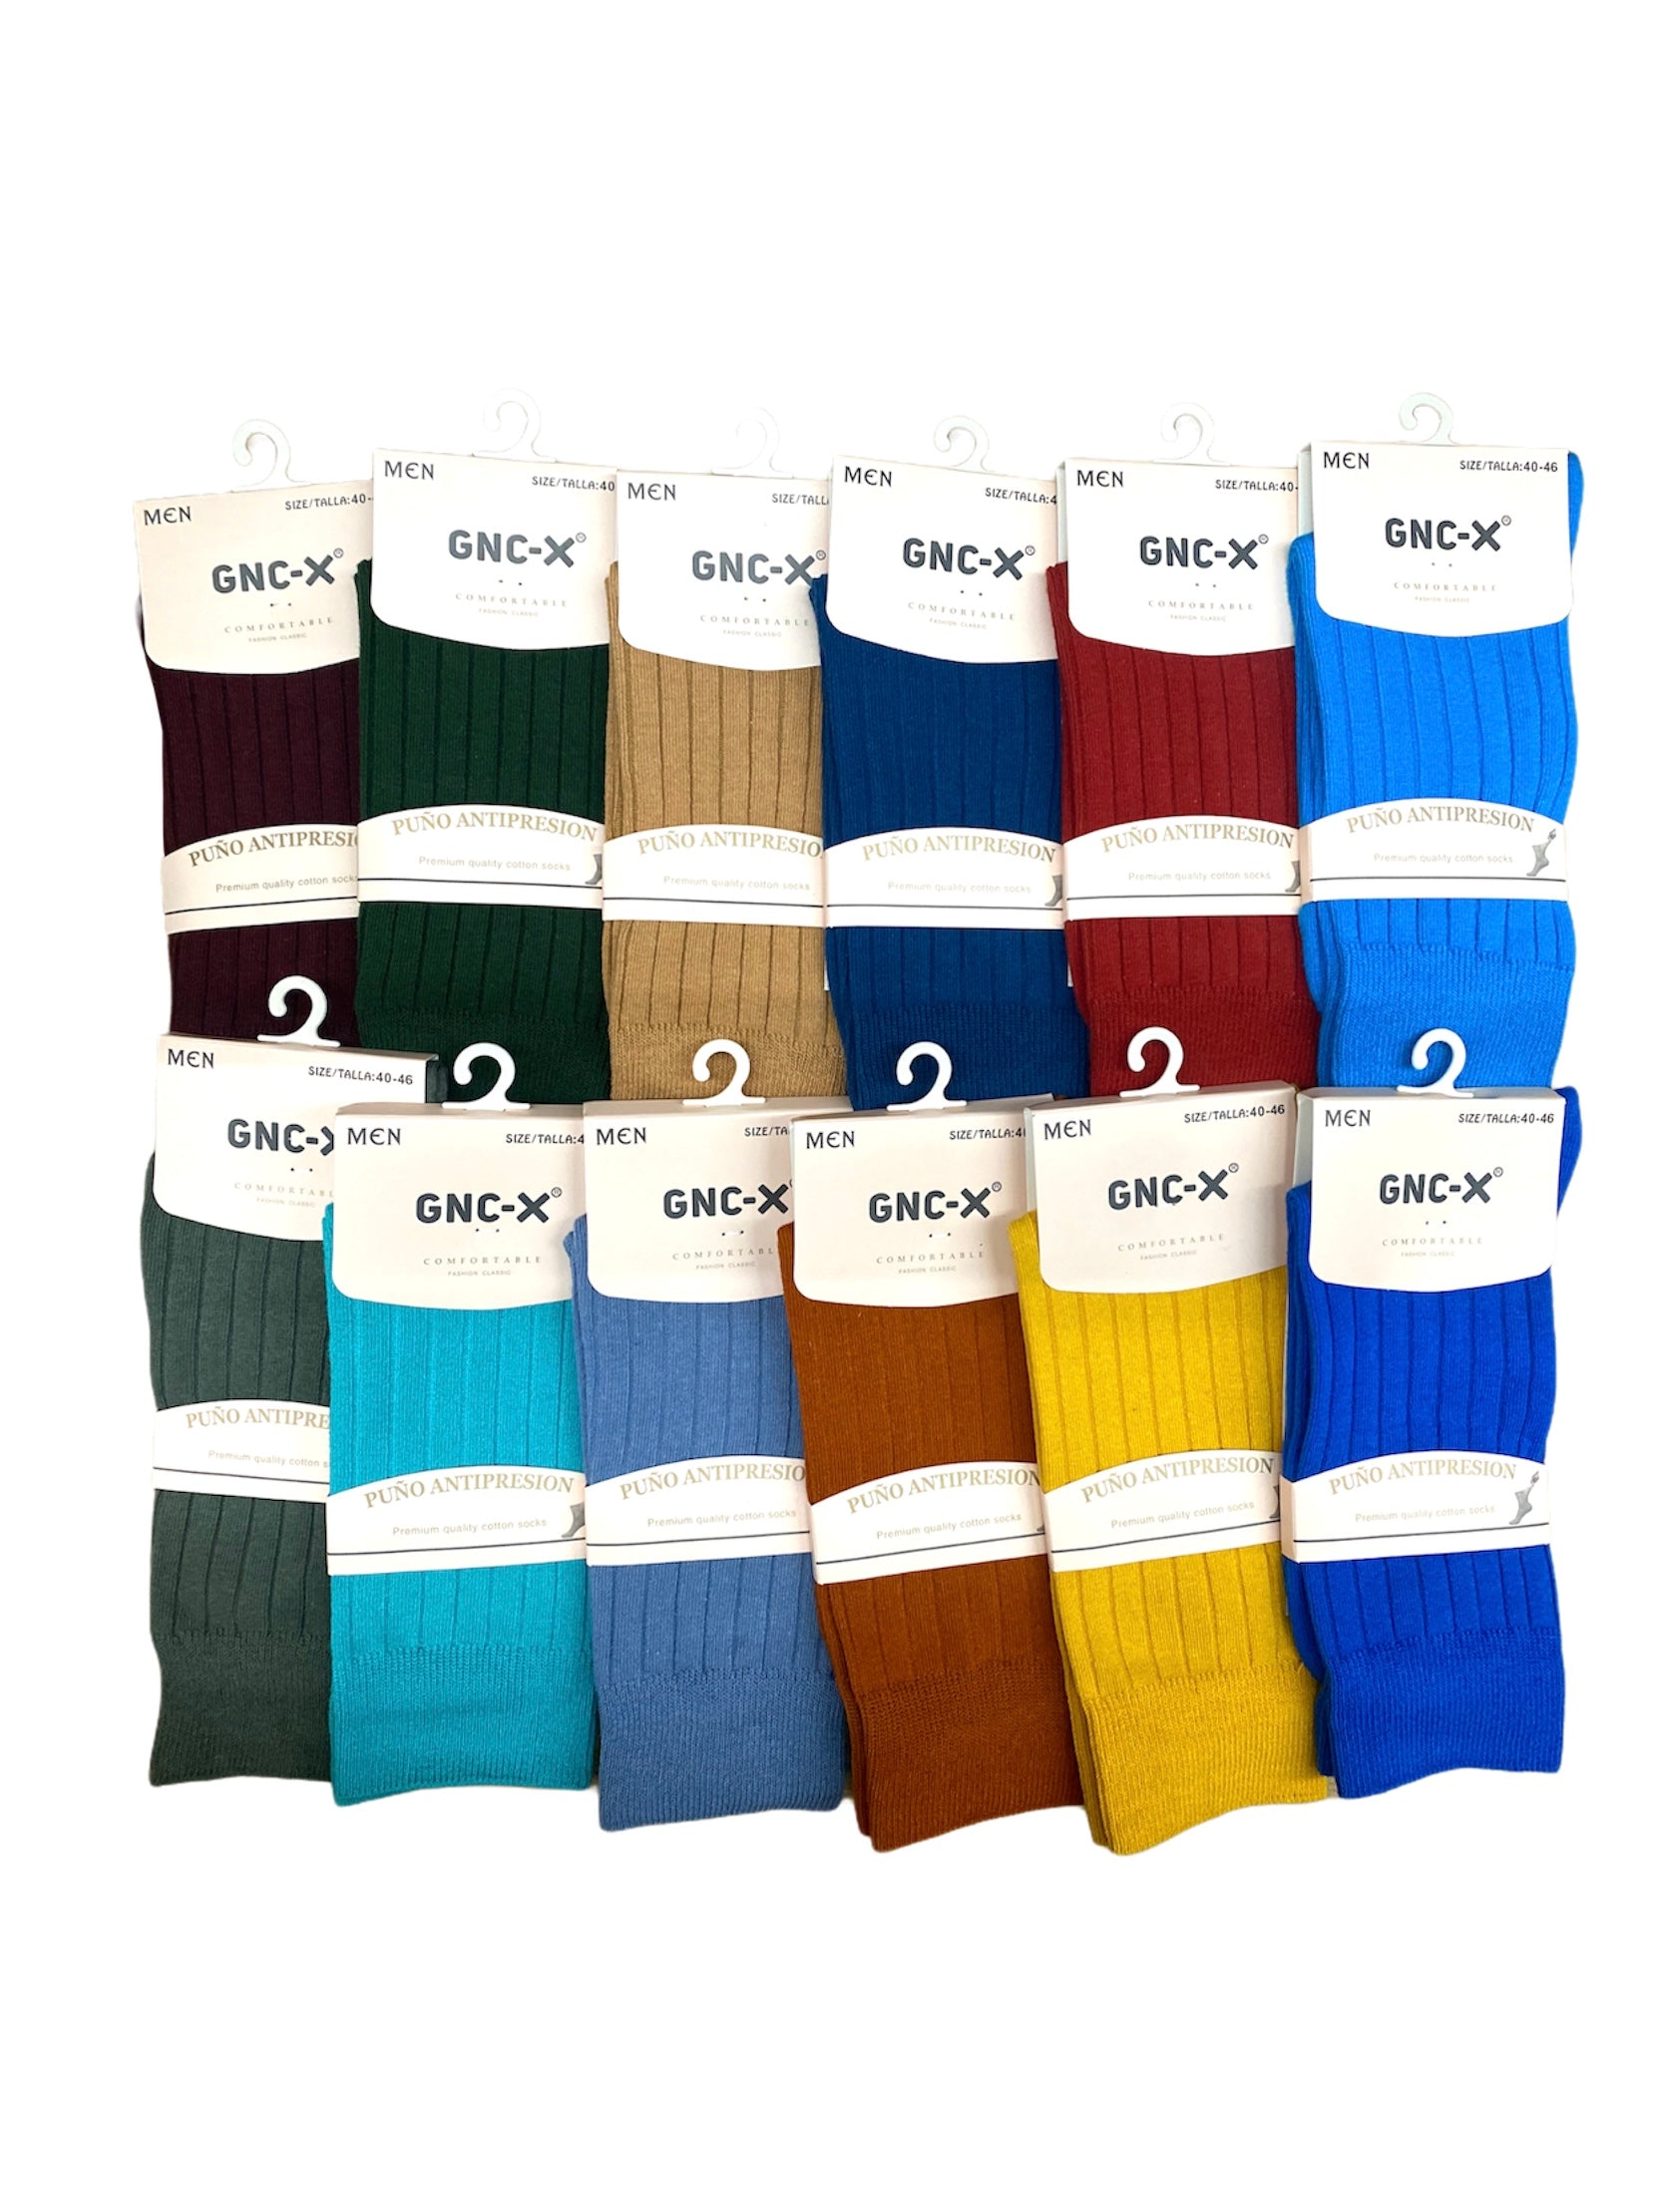 MEN Extra top quality socks (x24)